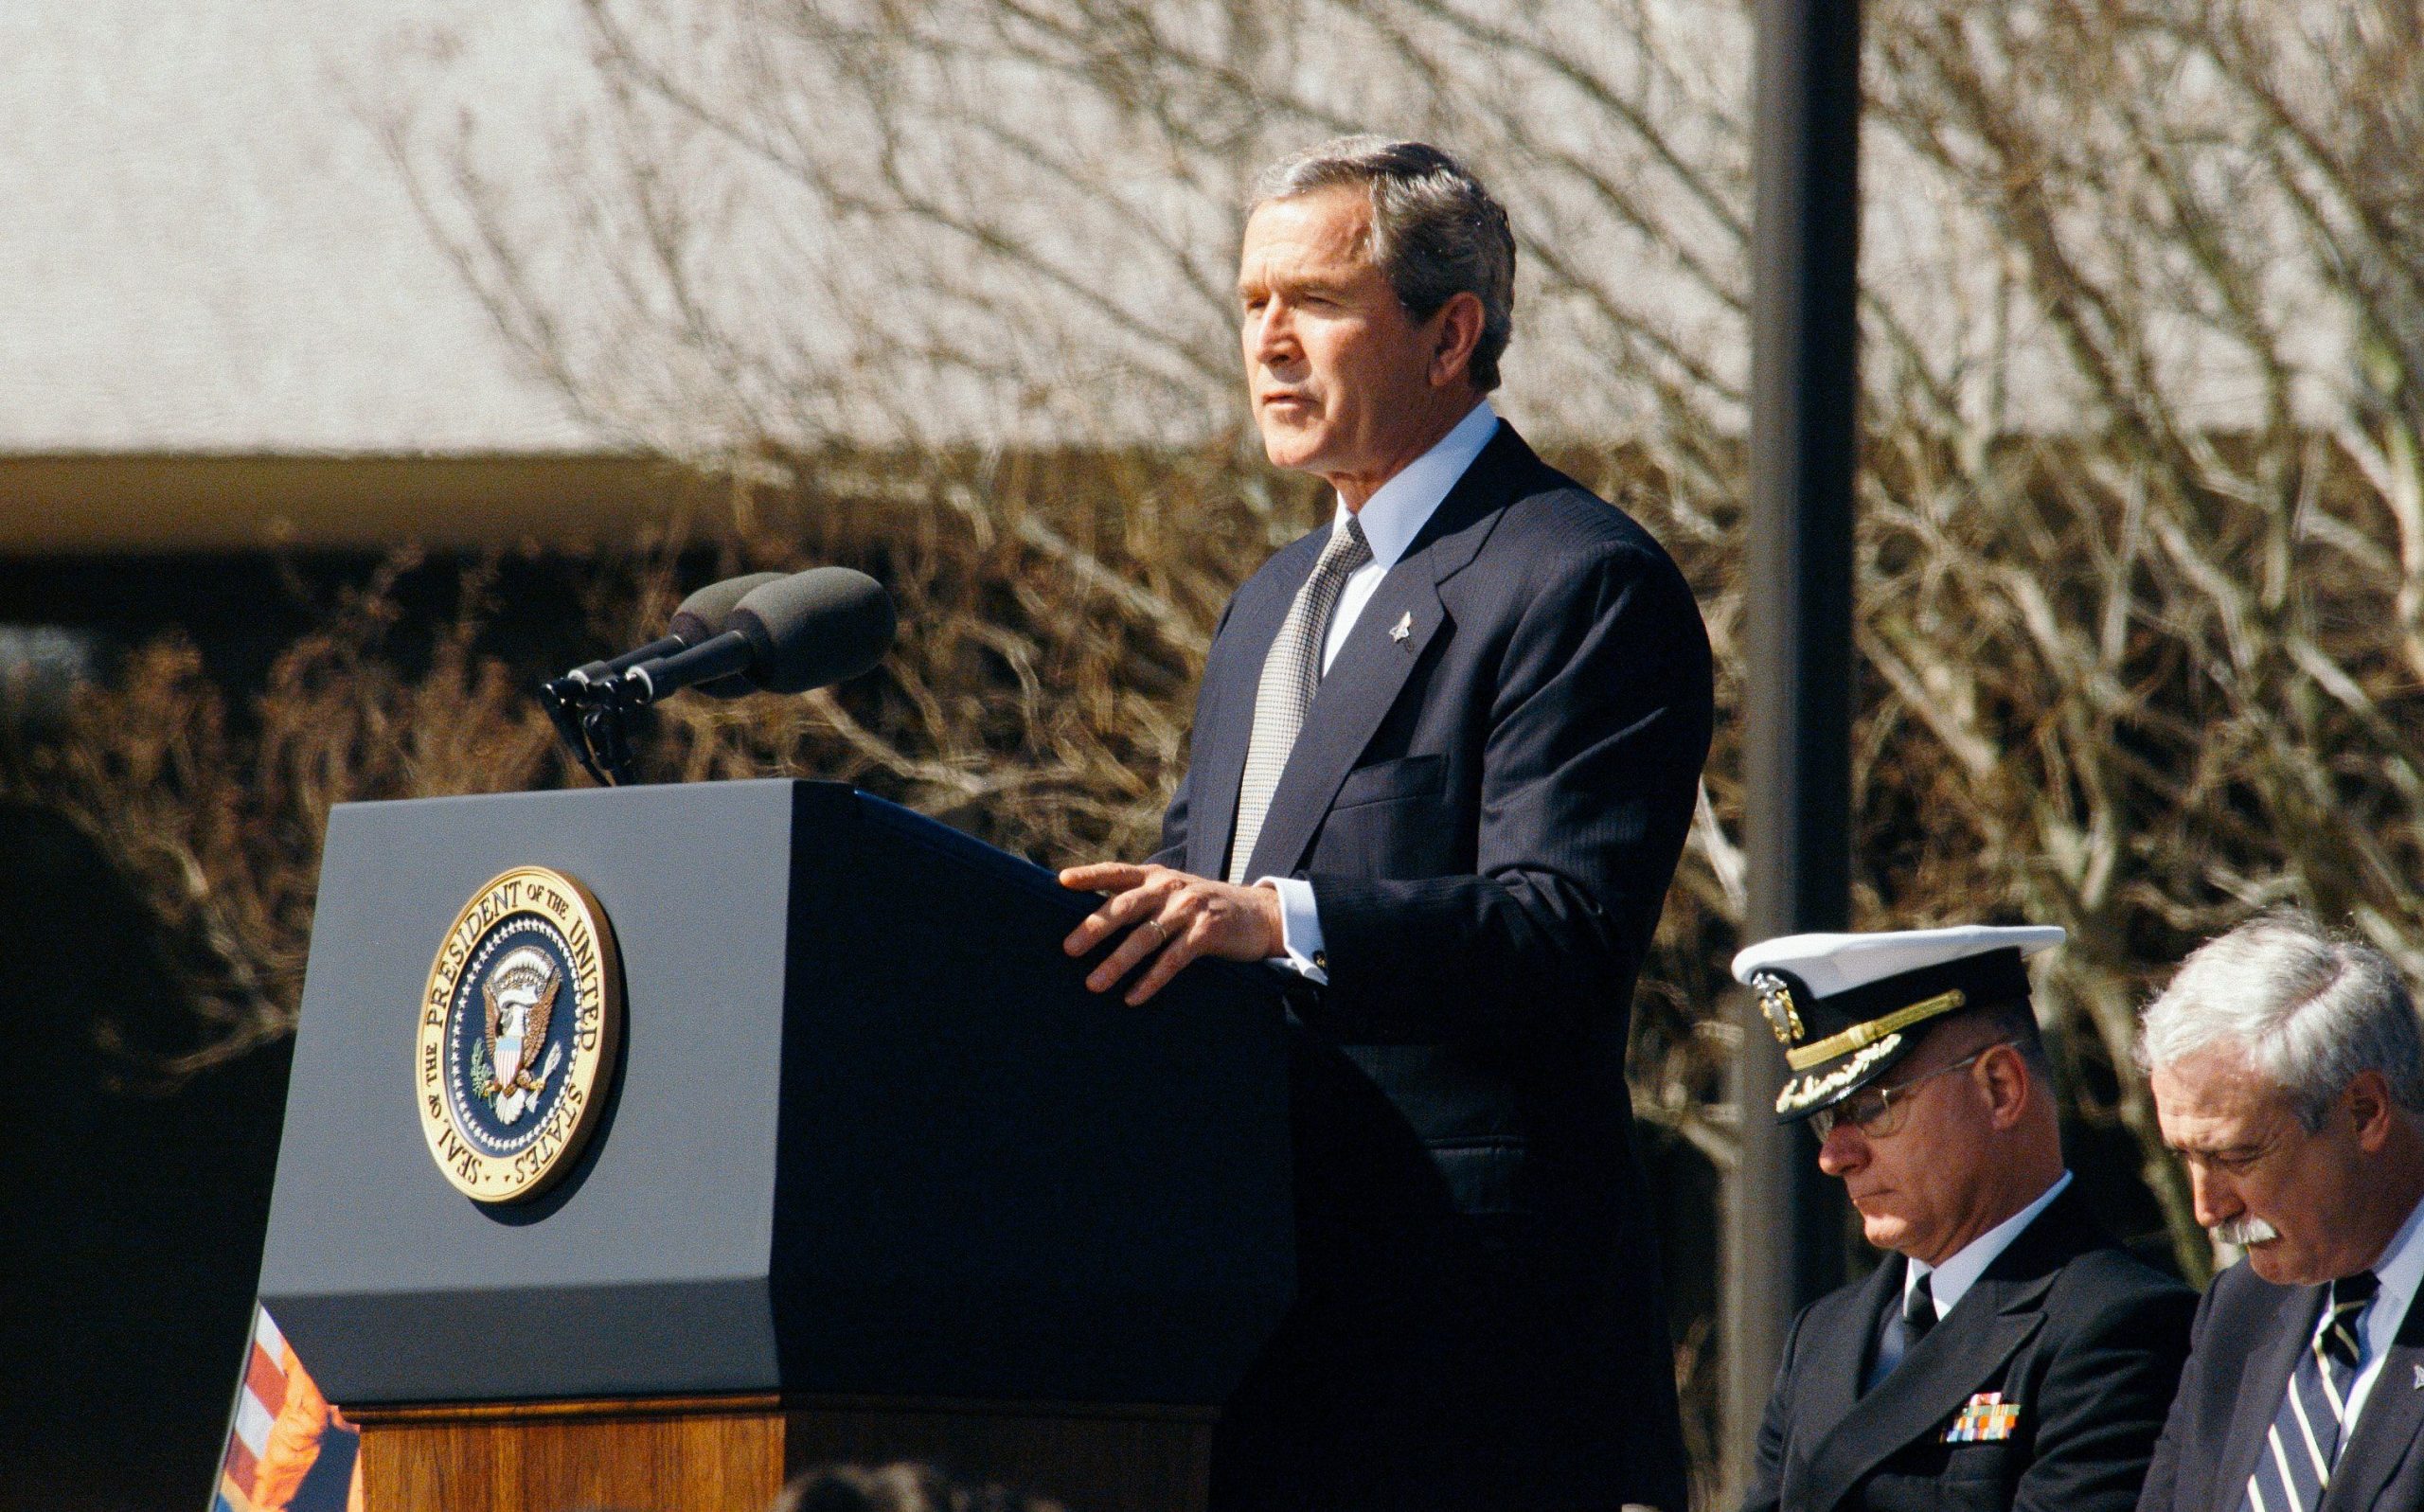 Deeply saddened: George W Bush on ‘great public servant’ Colin Powell